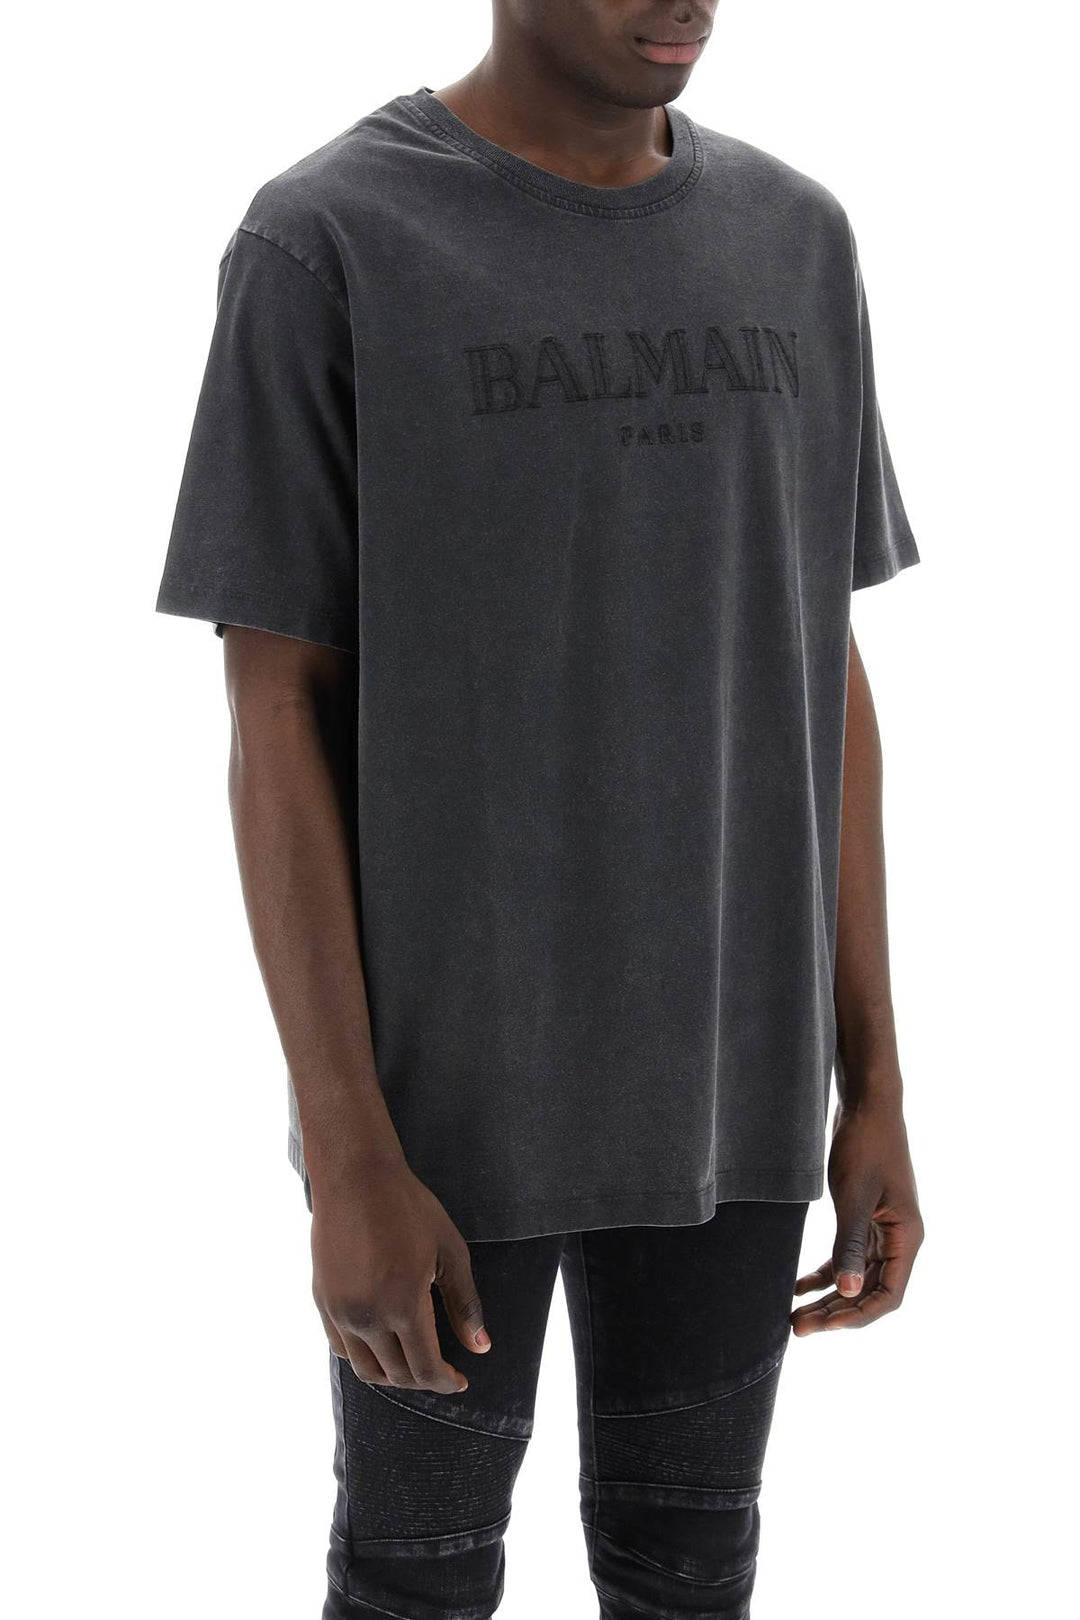 Balmain Vintage T Shirt   Grigio